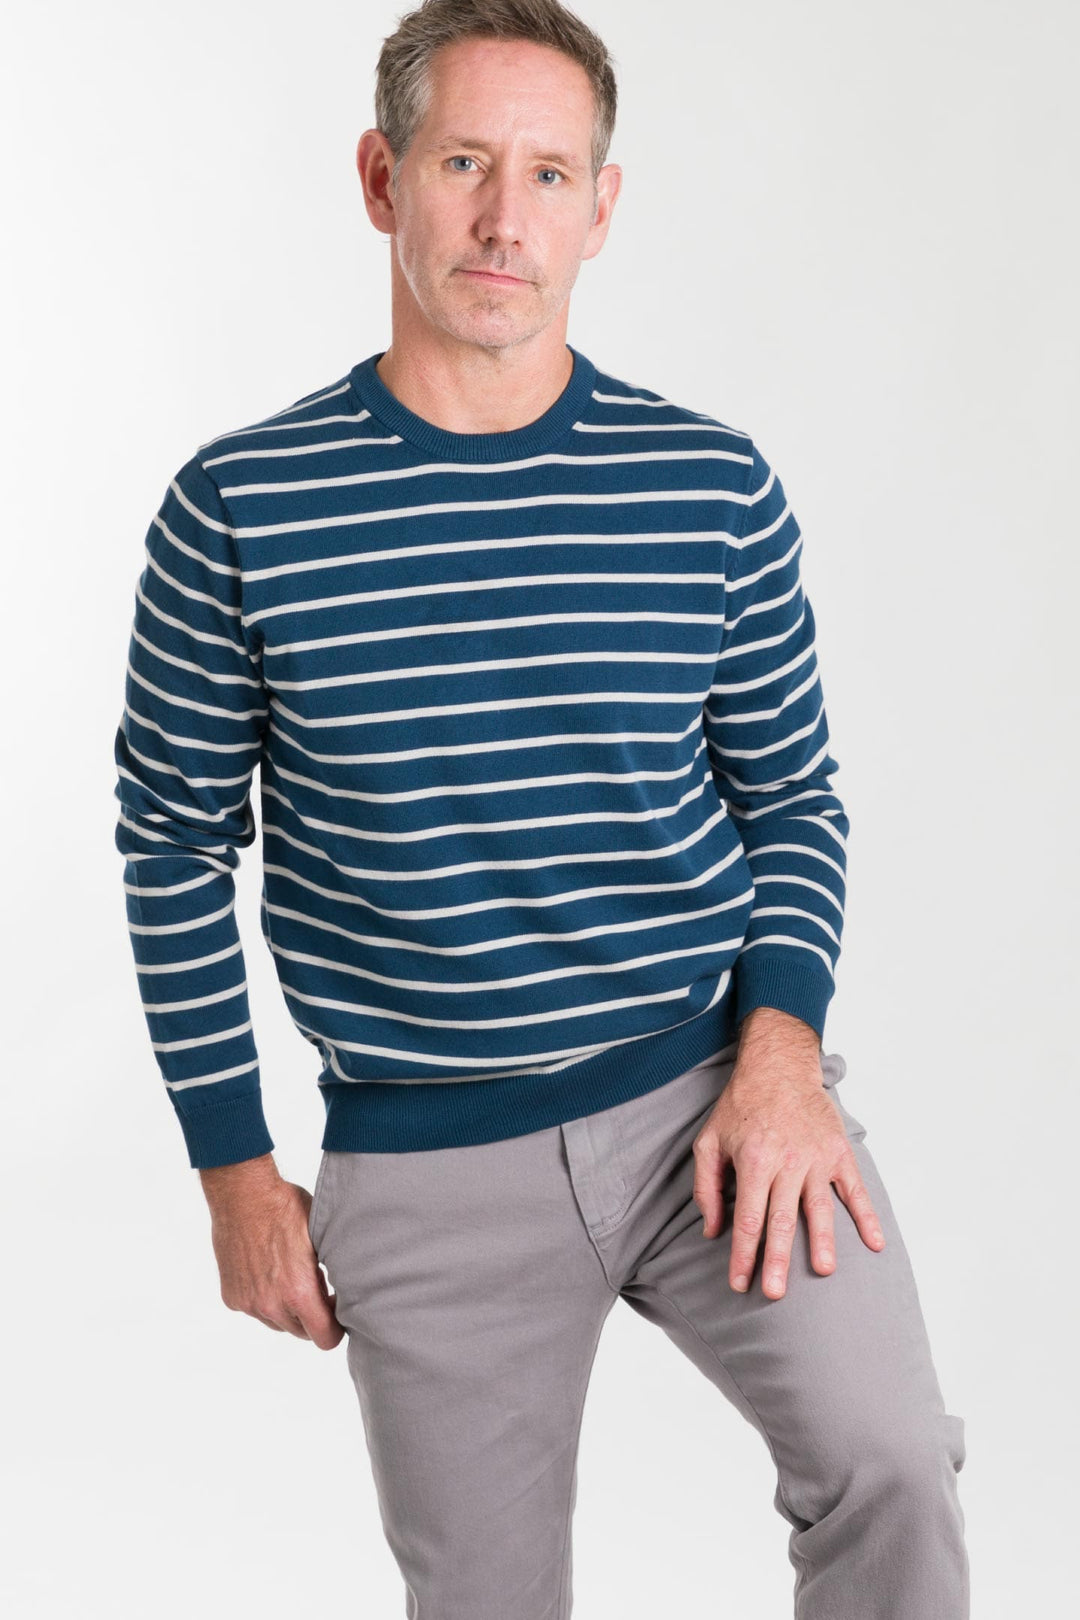 Buy Navy Stripes Cotton Sweater for Short Men | Ash & Erie   Sweater